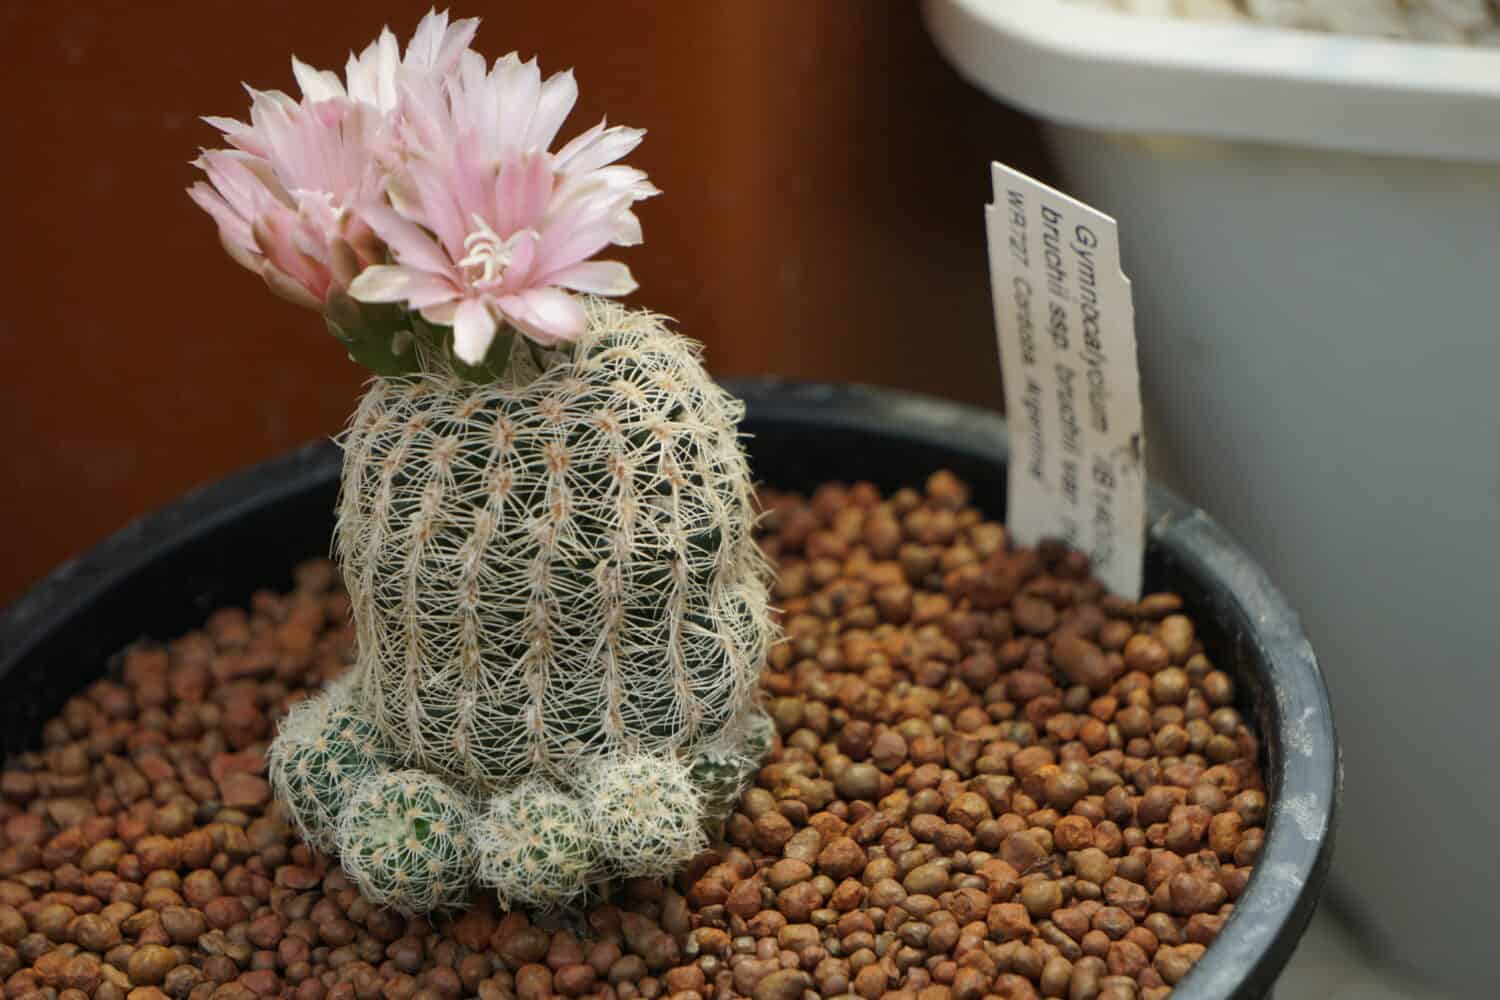 Cactus "Gymnocalycium Bruchii  var. nivium" with pink flower